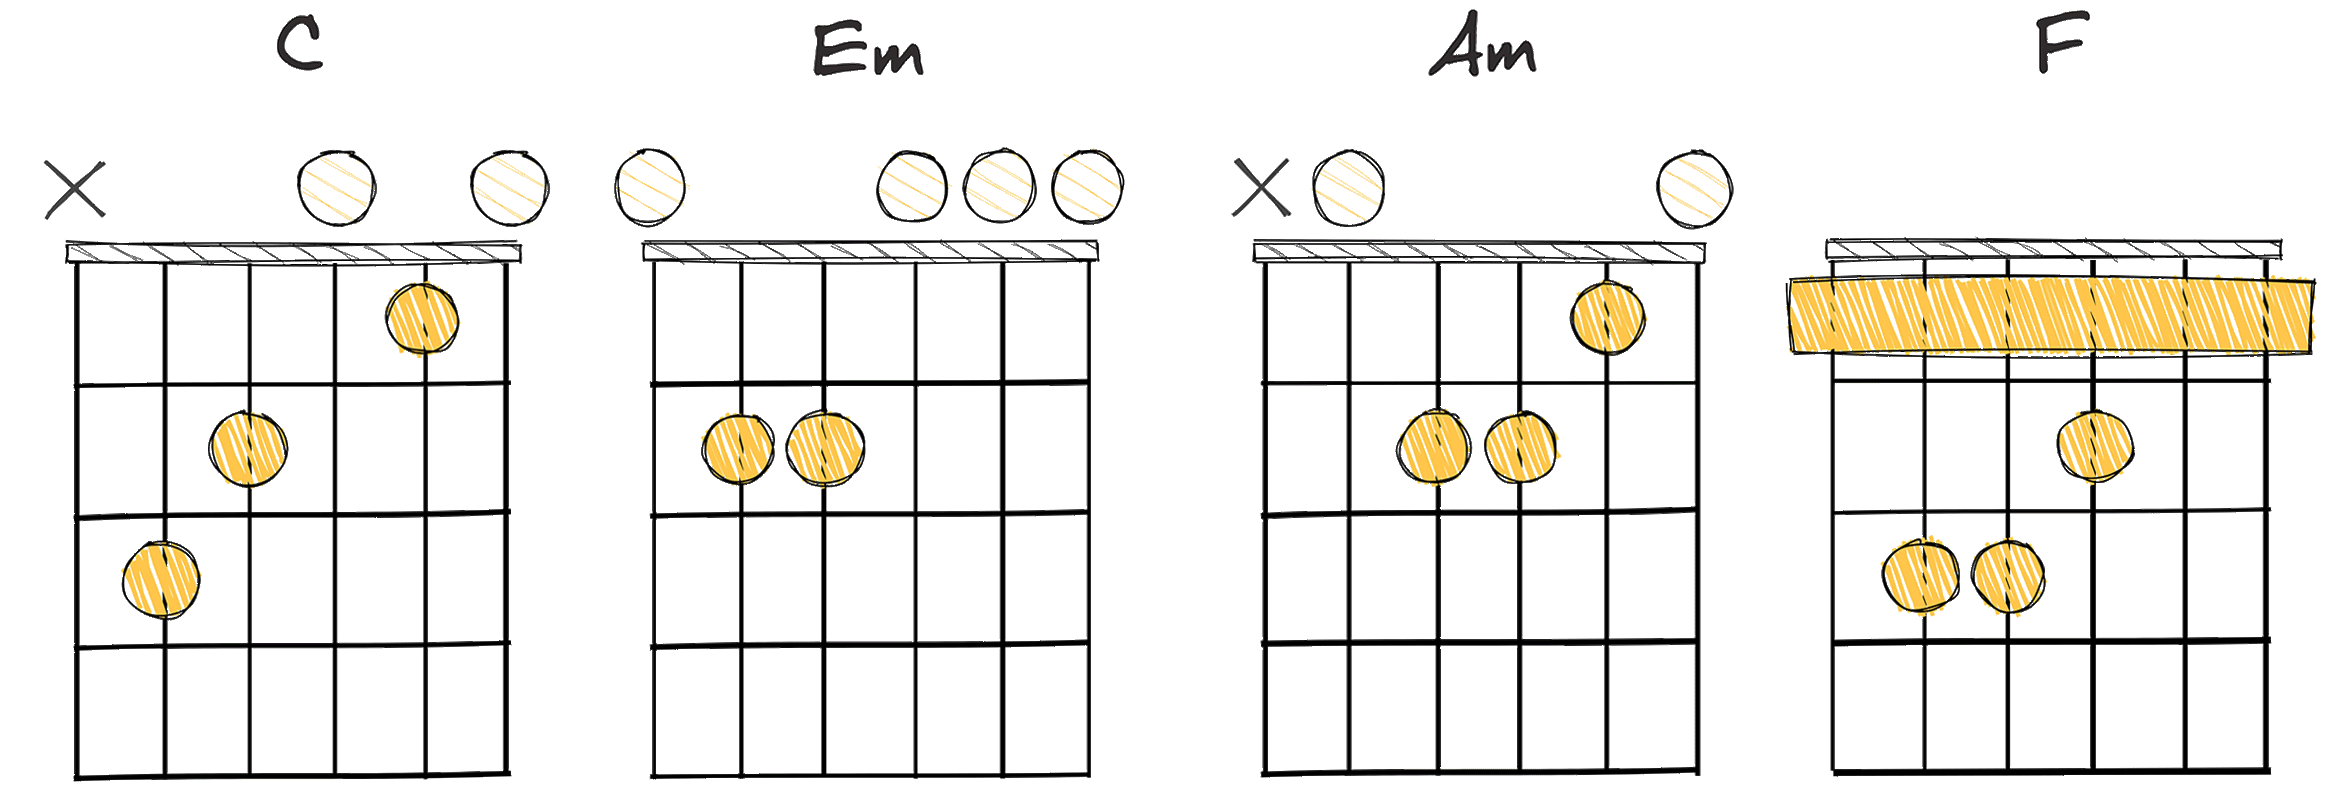 I - iii - vi - IV (1 - 3 - 6 - 4)  chords diagram